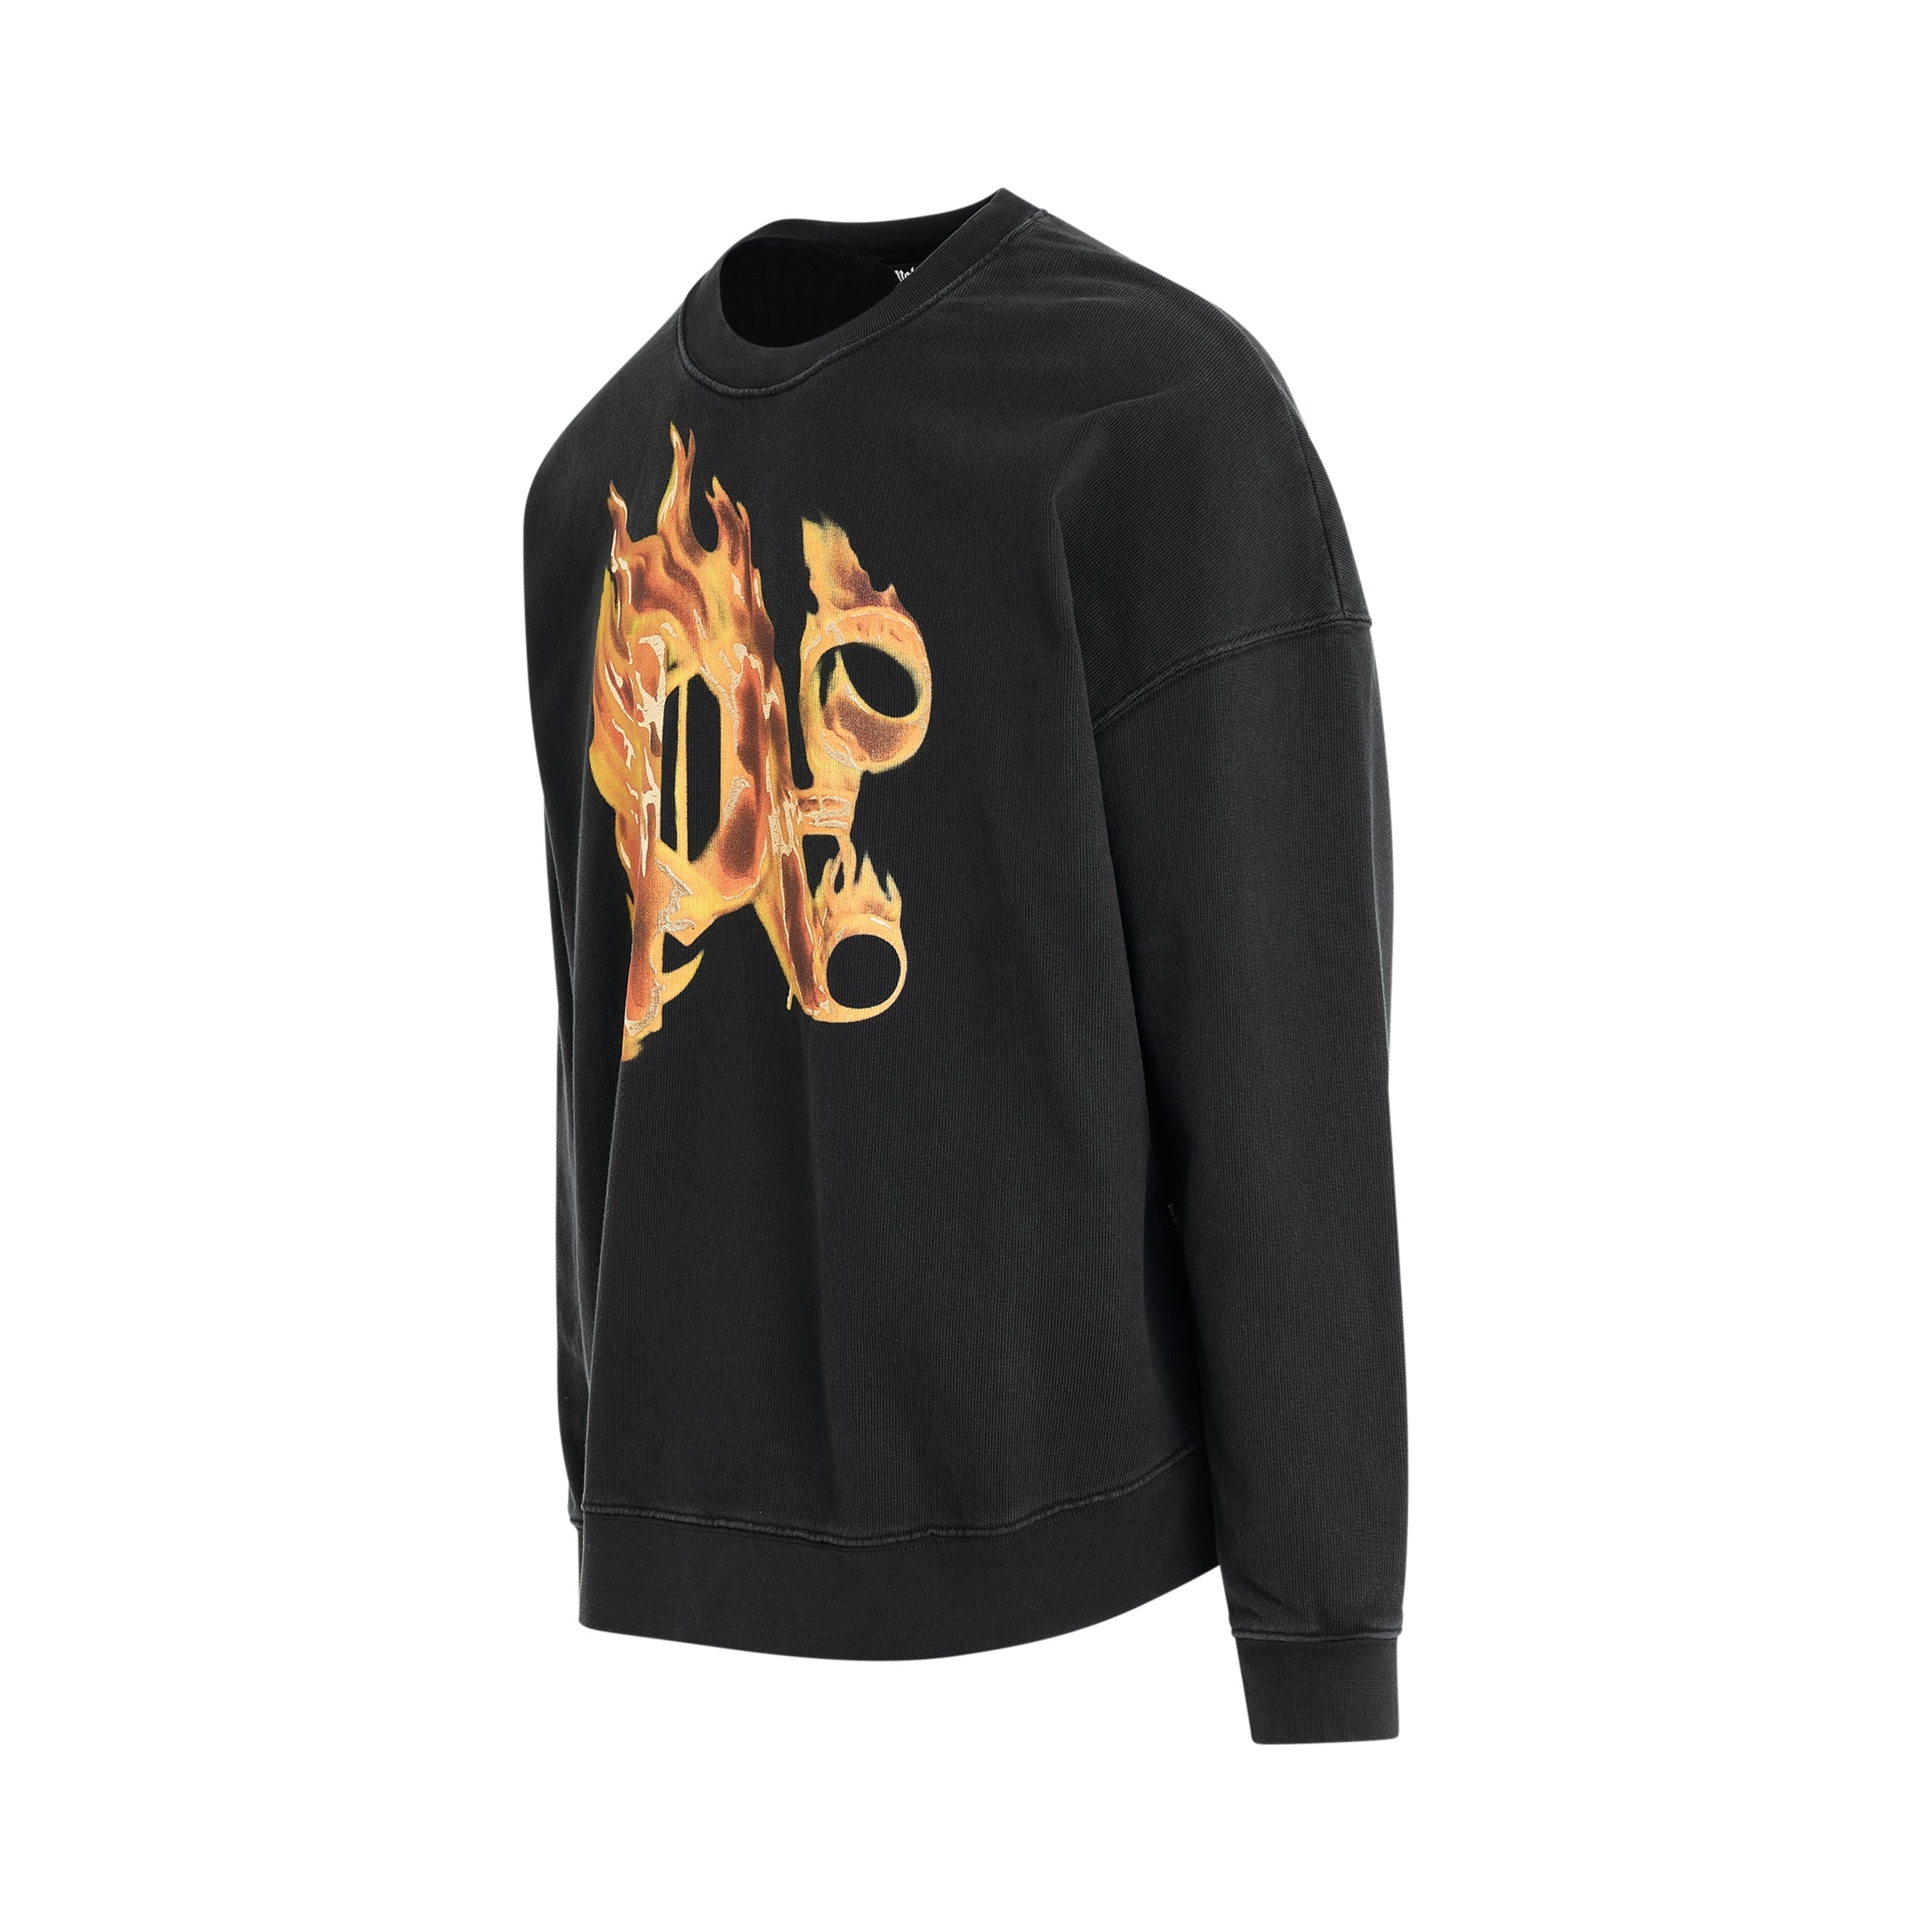 Burning Monogram Sweatshirt in Black/Gold - 2